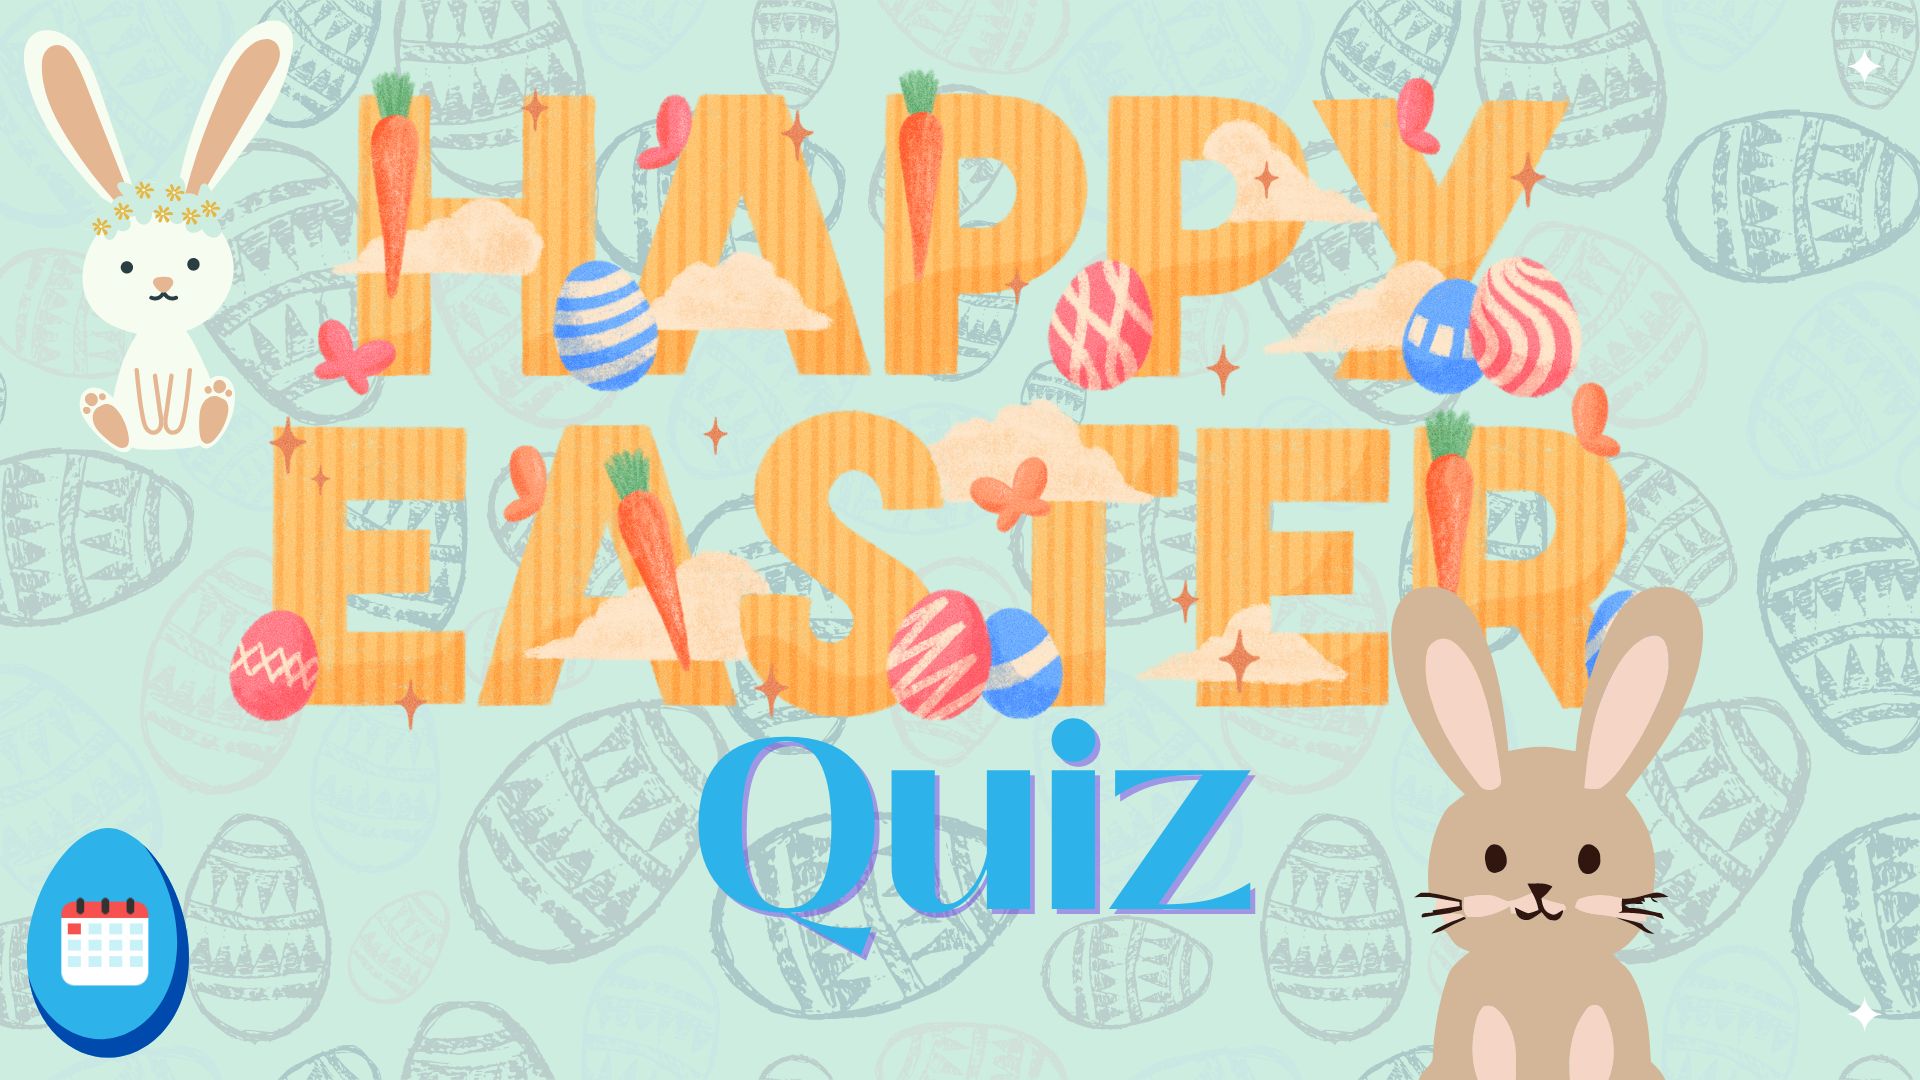 Easter quiz